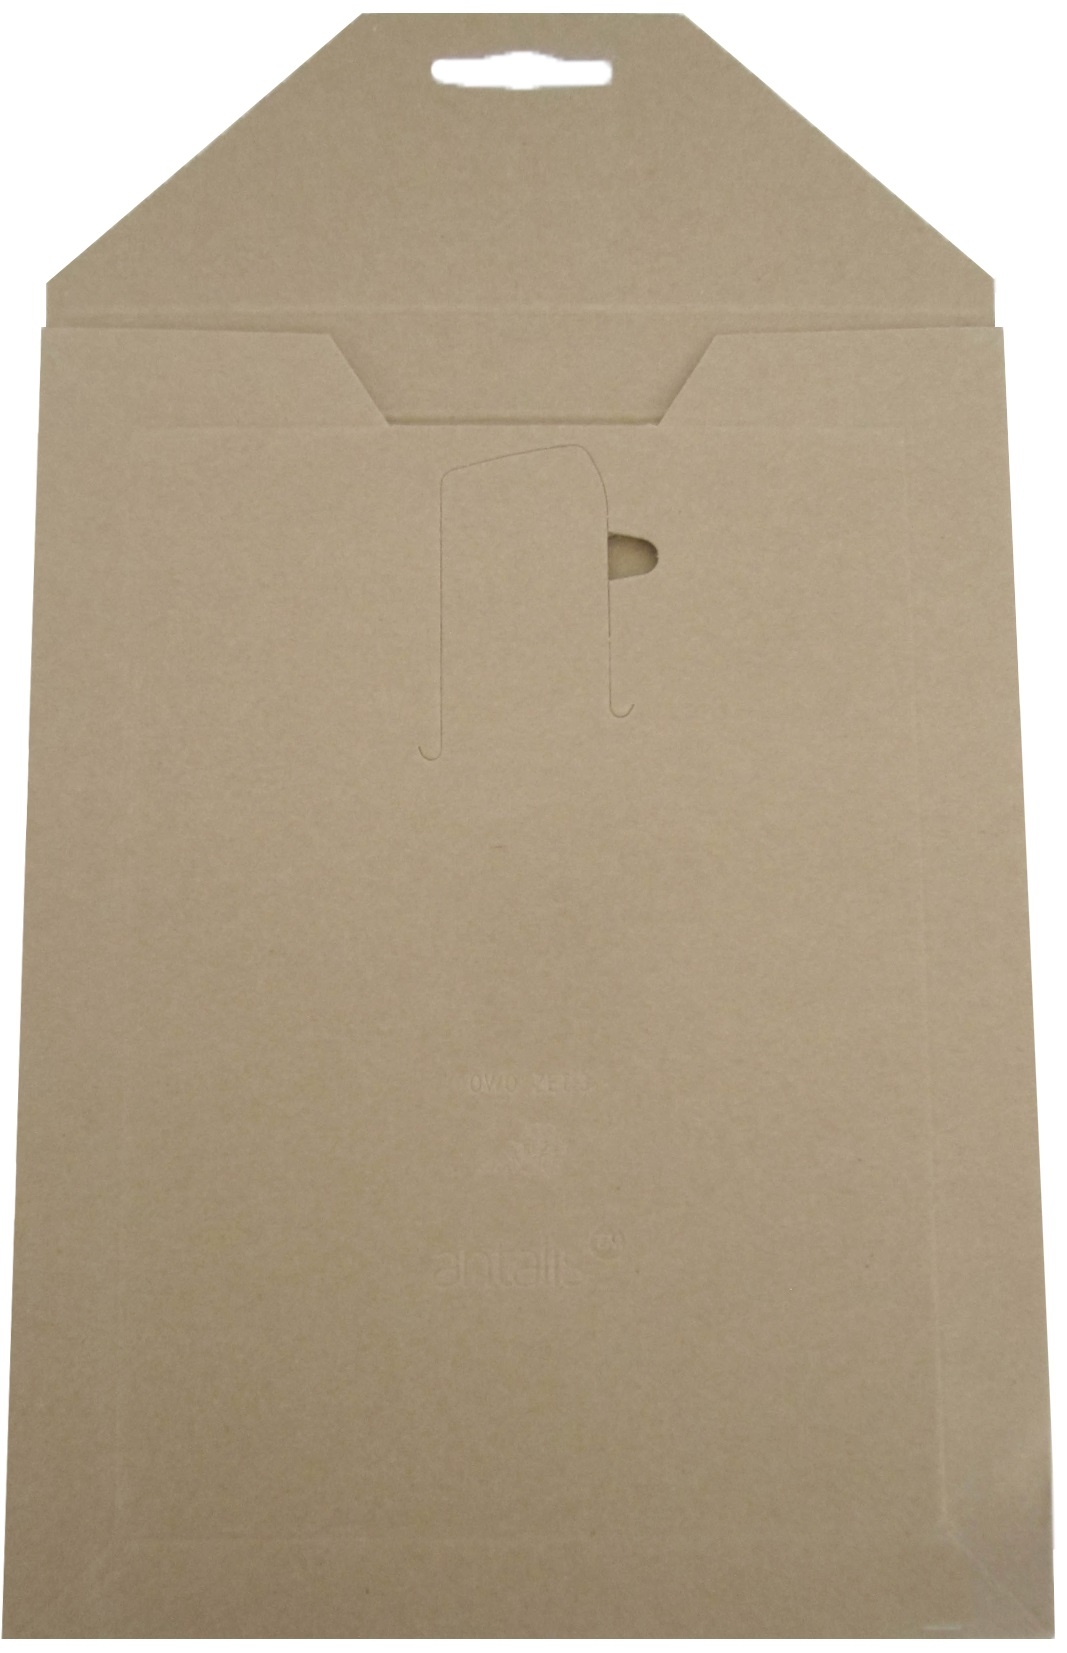 OWO-ZET Enveloppes Carton 3 276225 240x315mm brun 50 pcs.